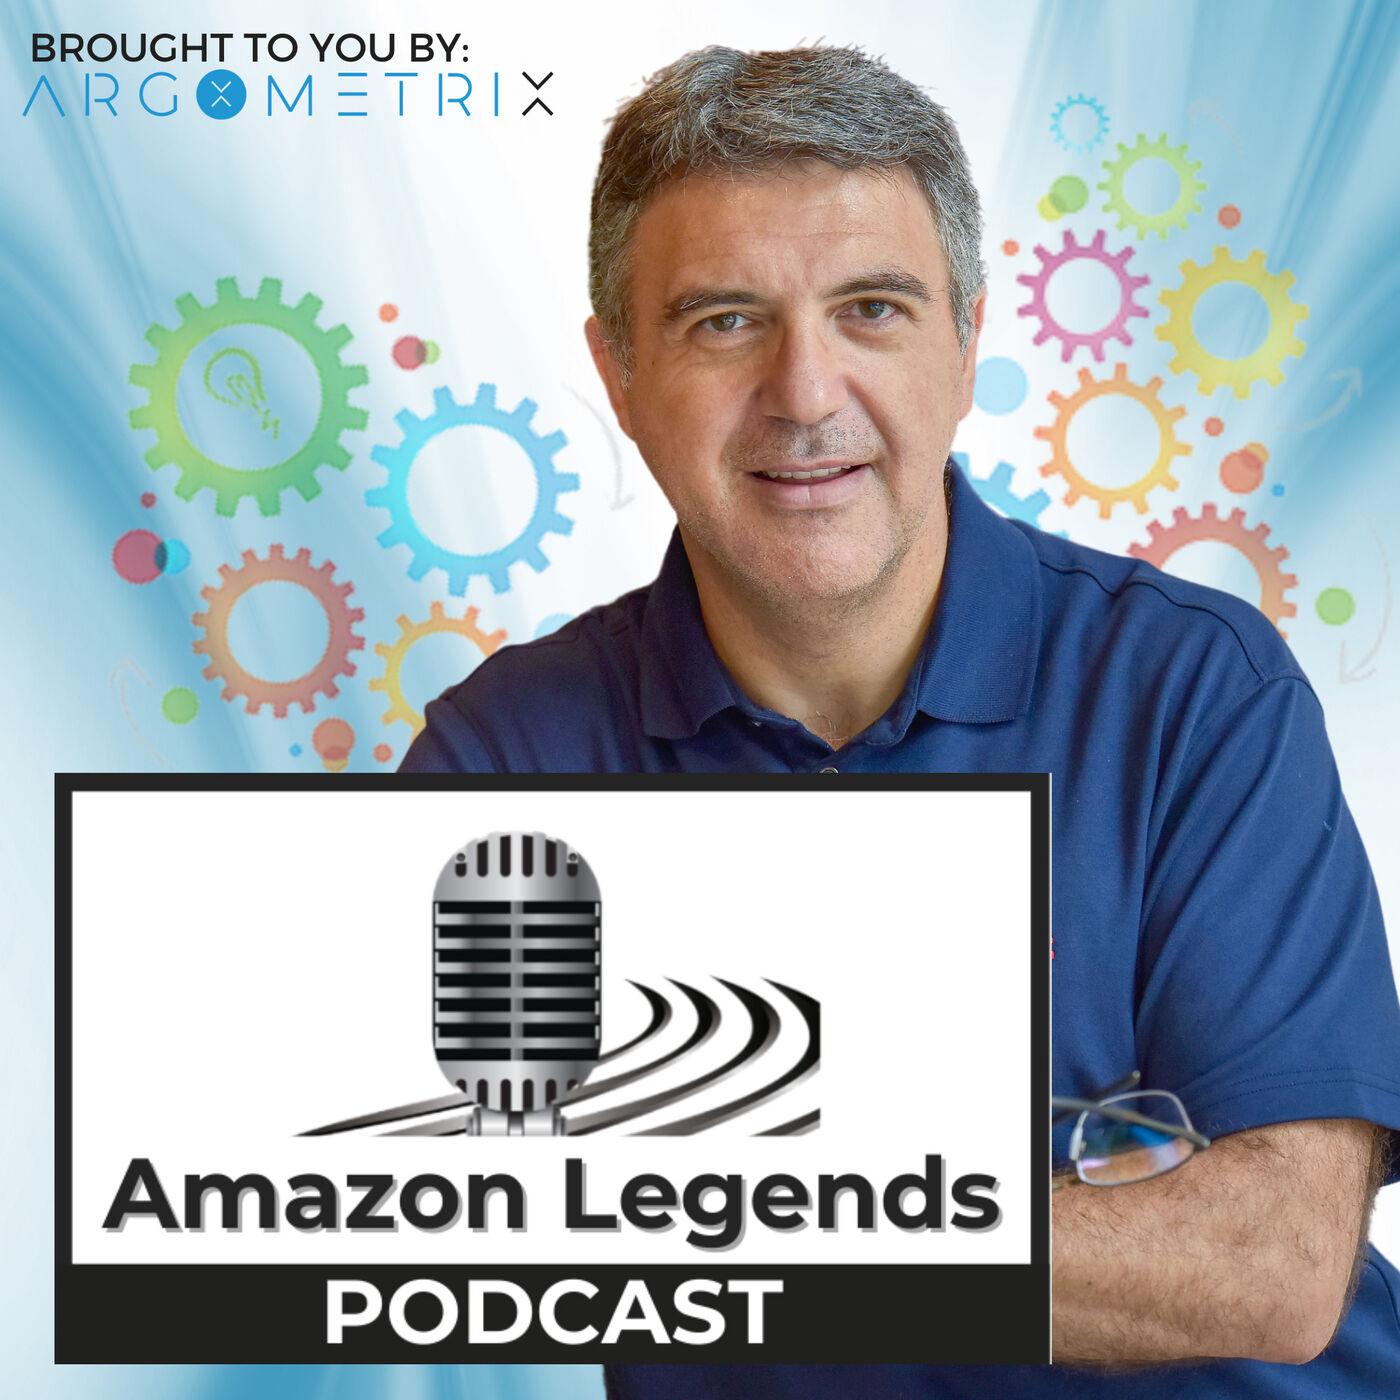 Amazon Legends podcast